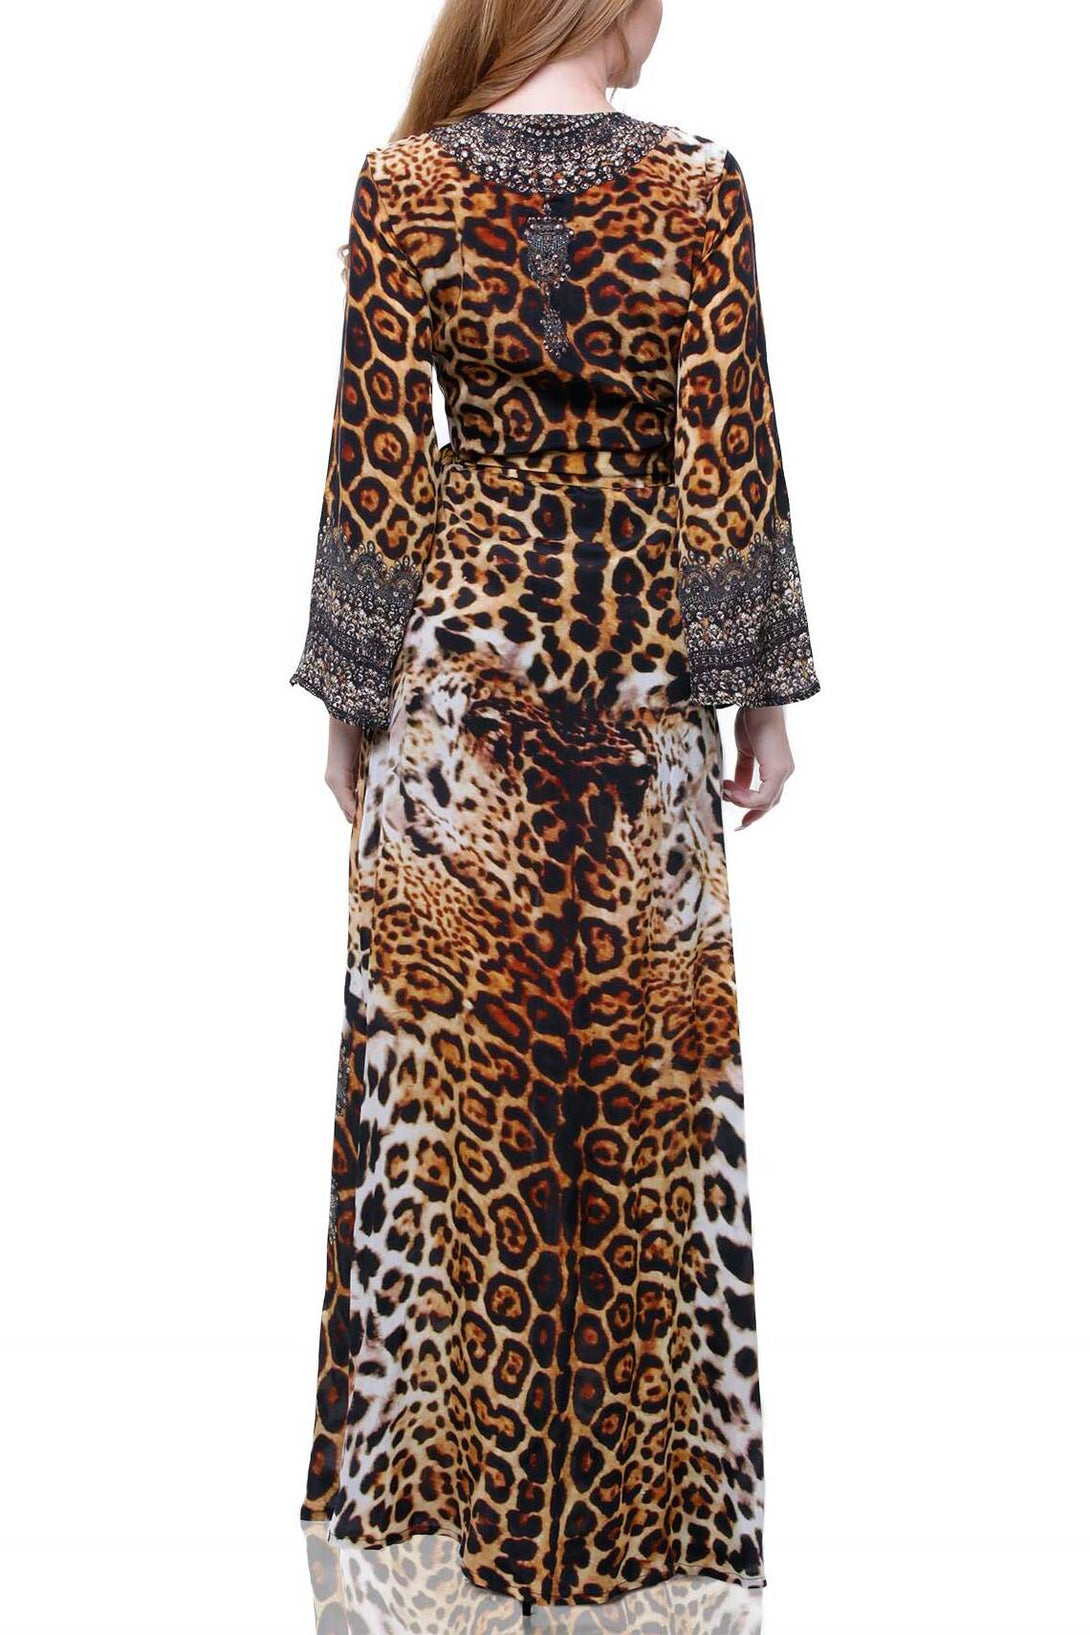 "wrap front maxi dress" "sleopard print dress wrap" "animal print wrap dress" "Shahida Parides"